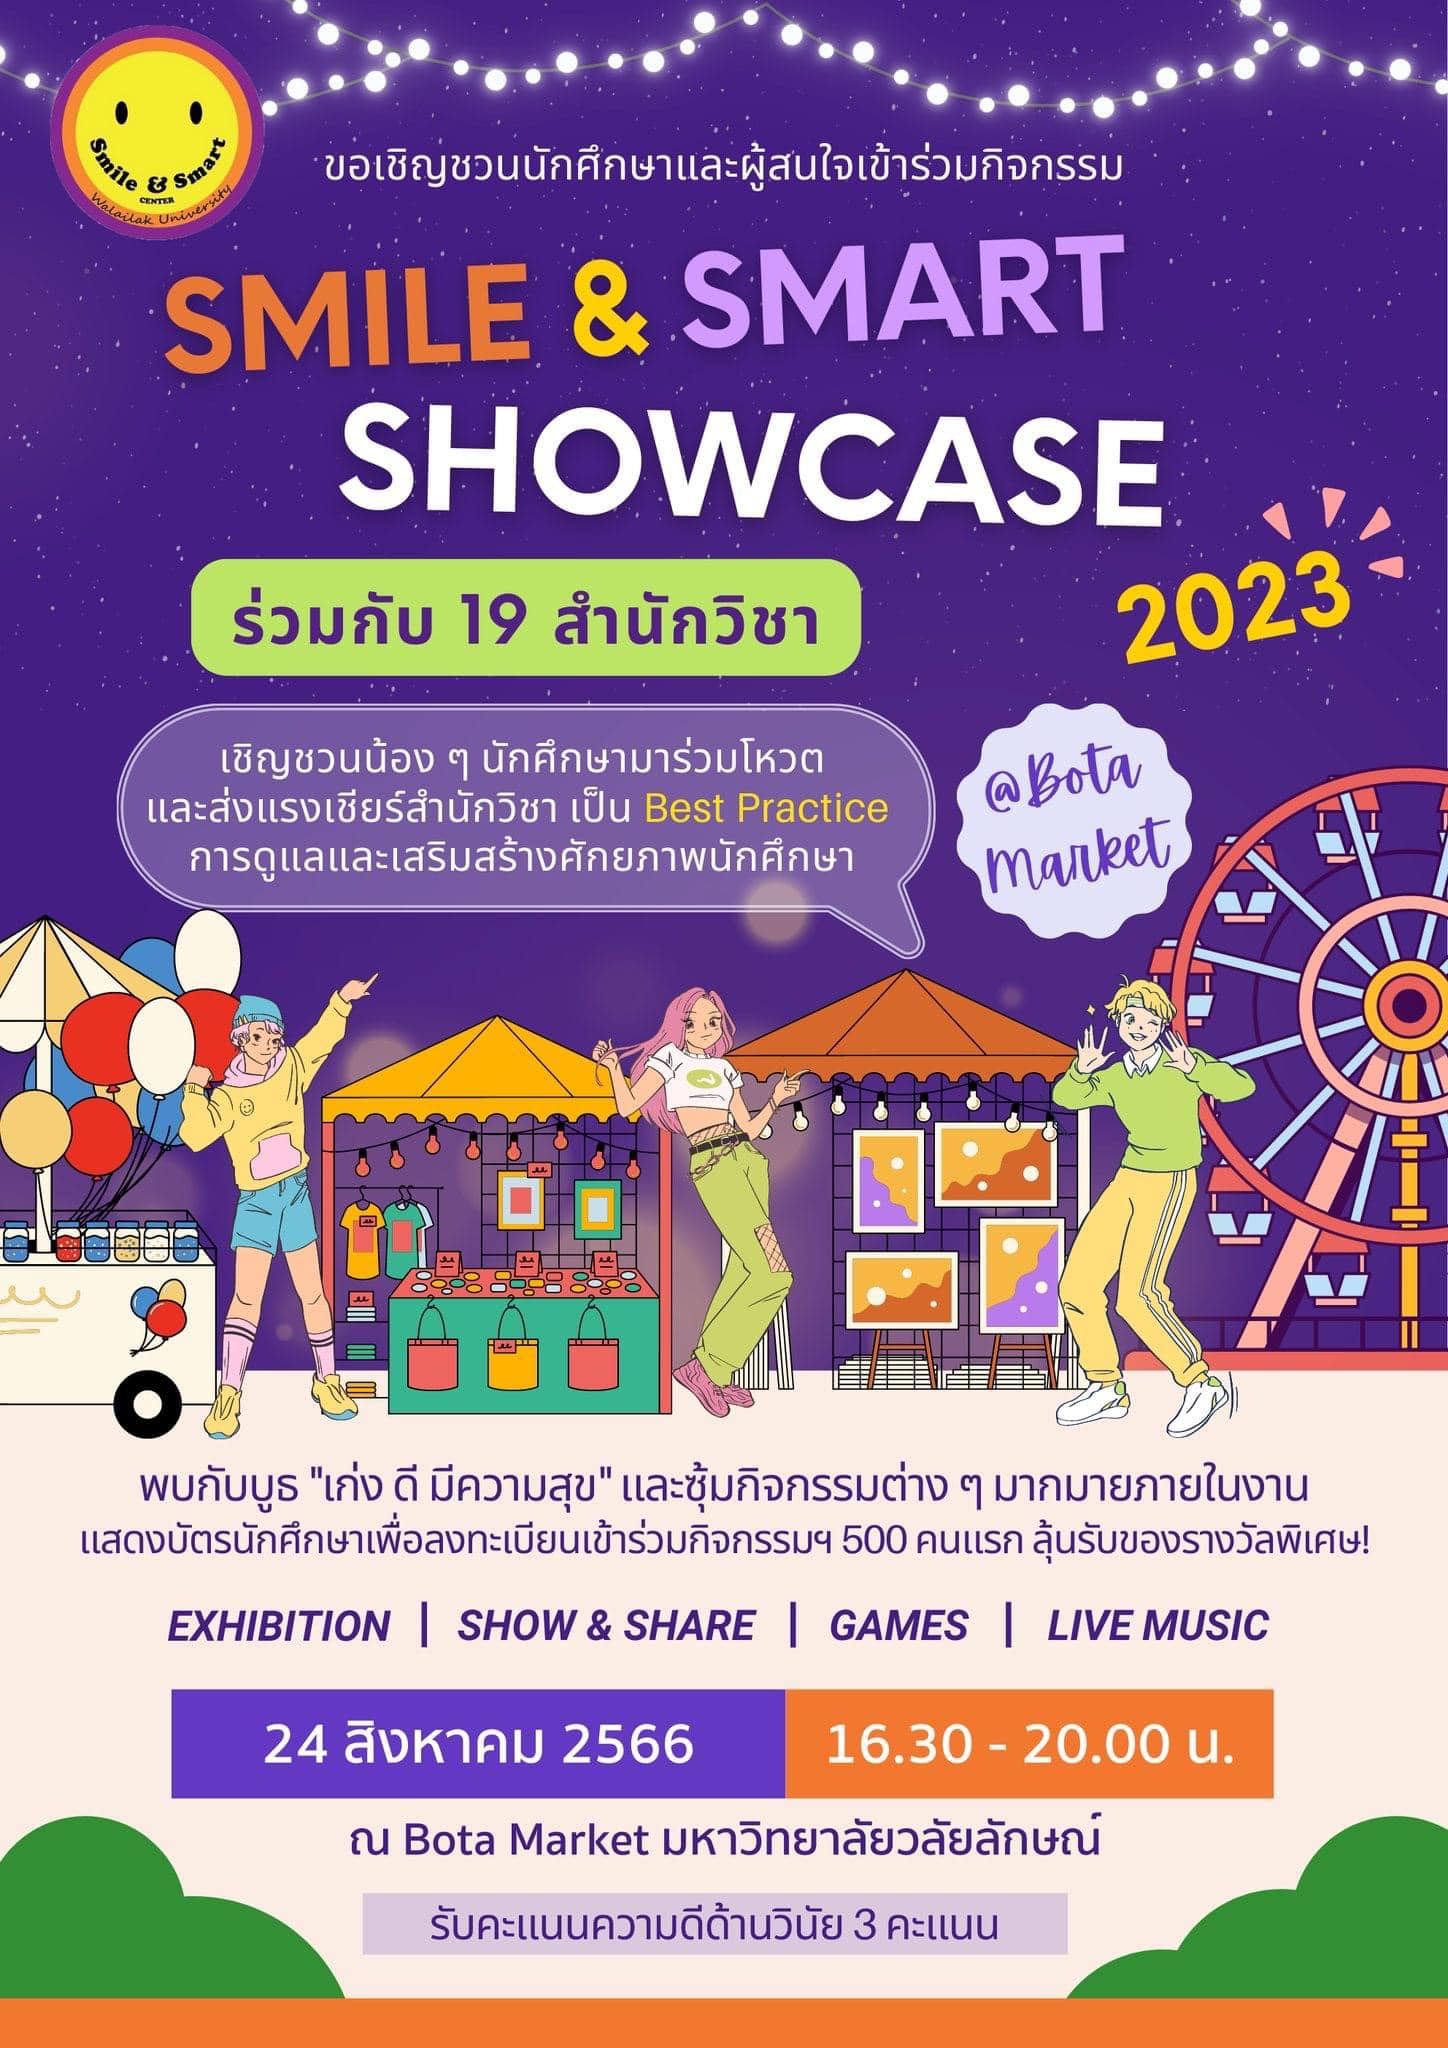 Smile & Smart Showcase